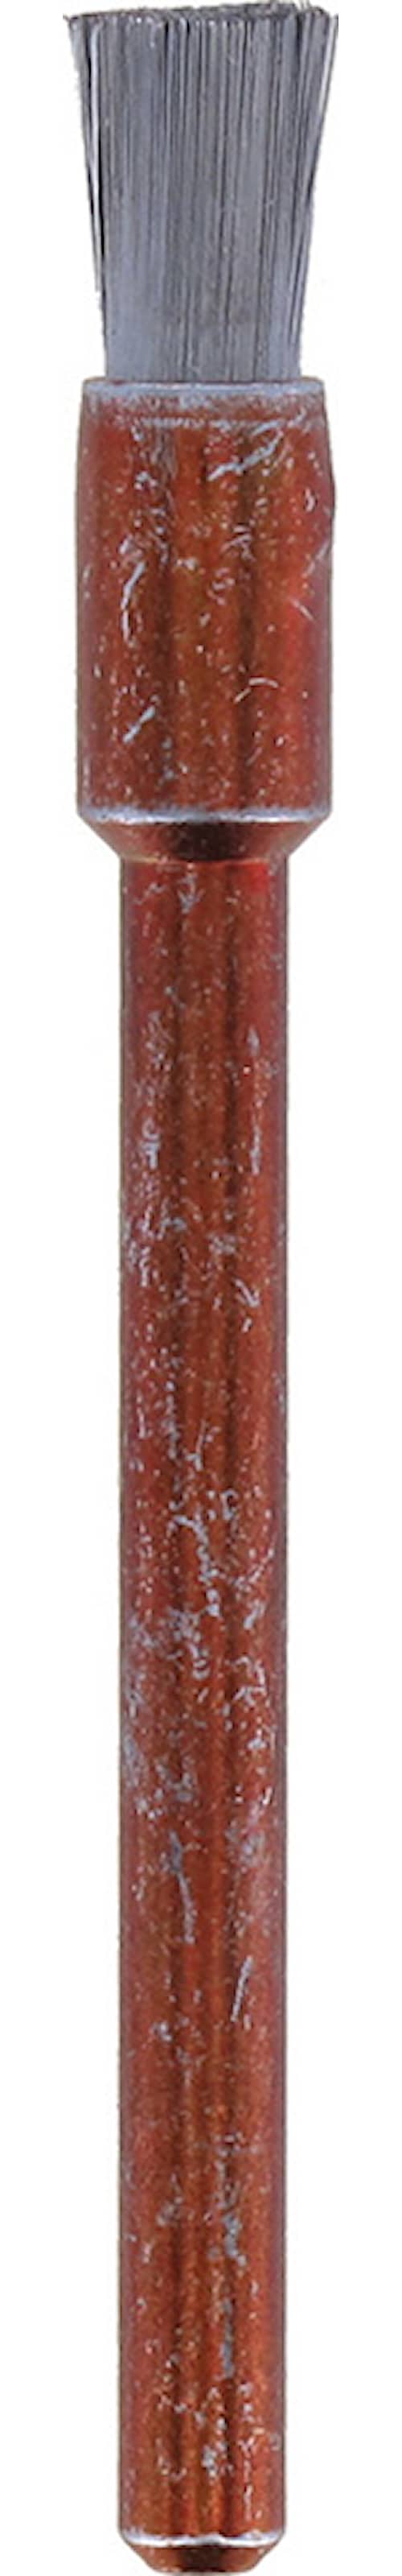 Dremel penselstålbørste 532 3,2 mm 3 stk.